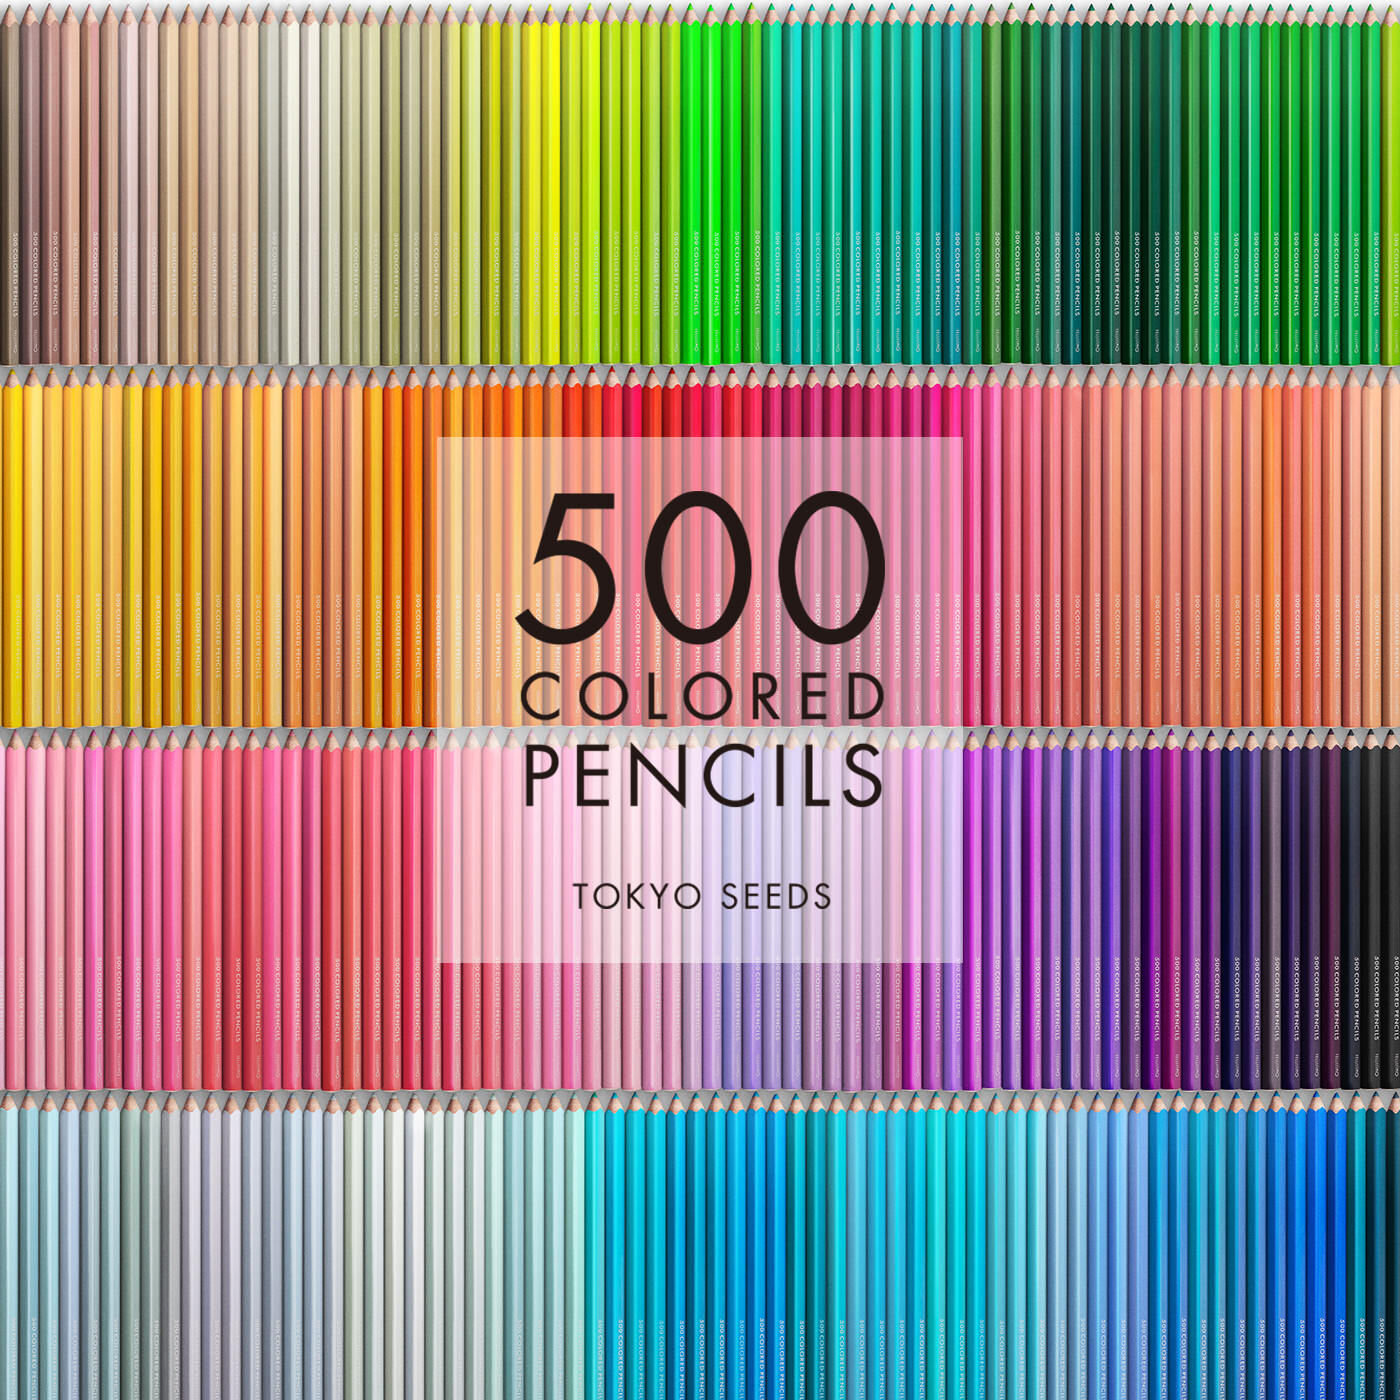 Real Stock|【155/500 ENCHANTED MEMORIES】500色の色えんぴつ TOKYO SEEDS|1992年、世界初の「500色」という膨大な色数の色えんぴつが誕生して以来、その販売数は発売当初から合わせると、世界55ヵ国10万セット以上。今回、メイド・イン・ジャパンにこだわり、すべてが新しく生まれ変わって登場しました。